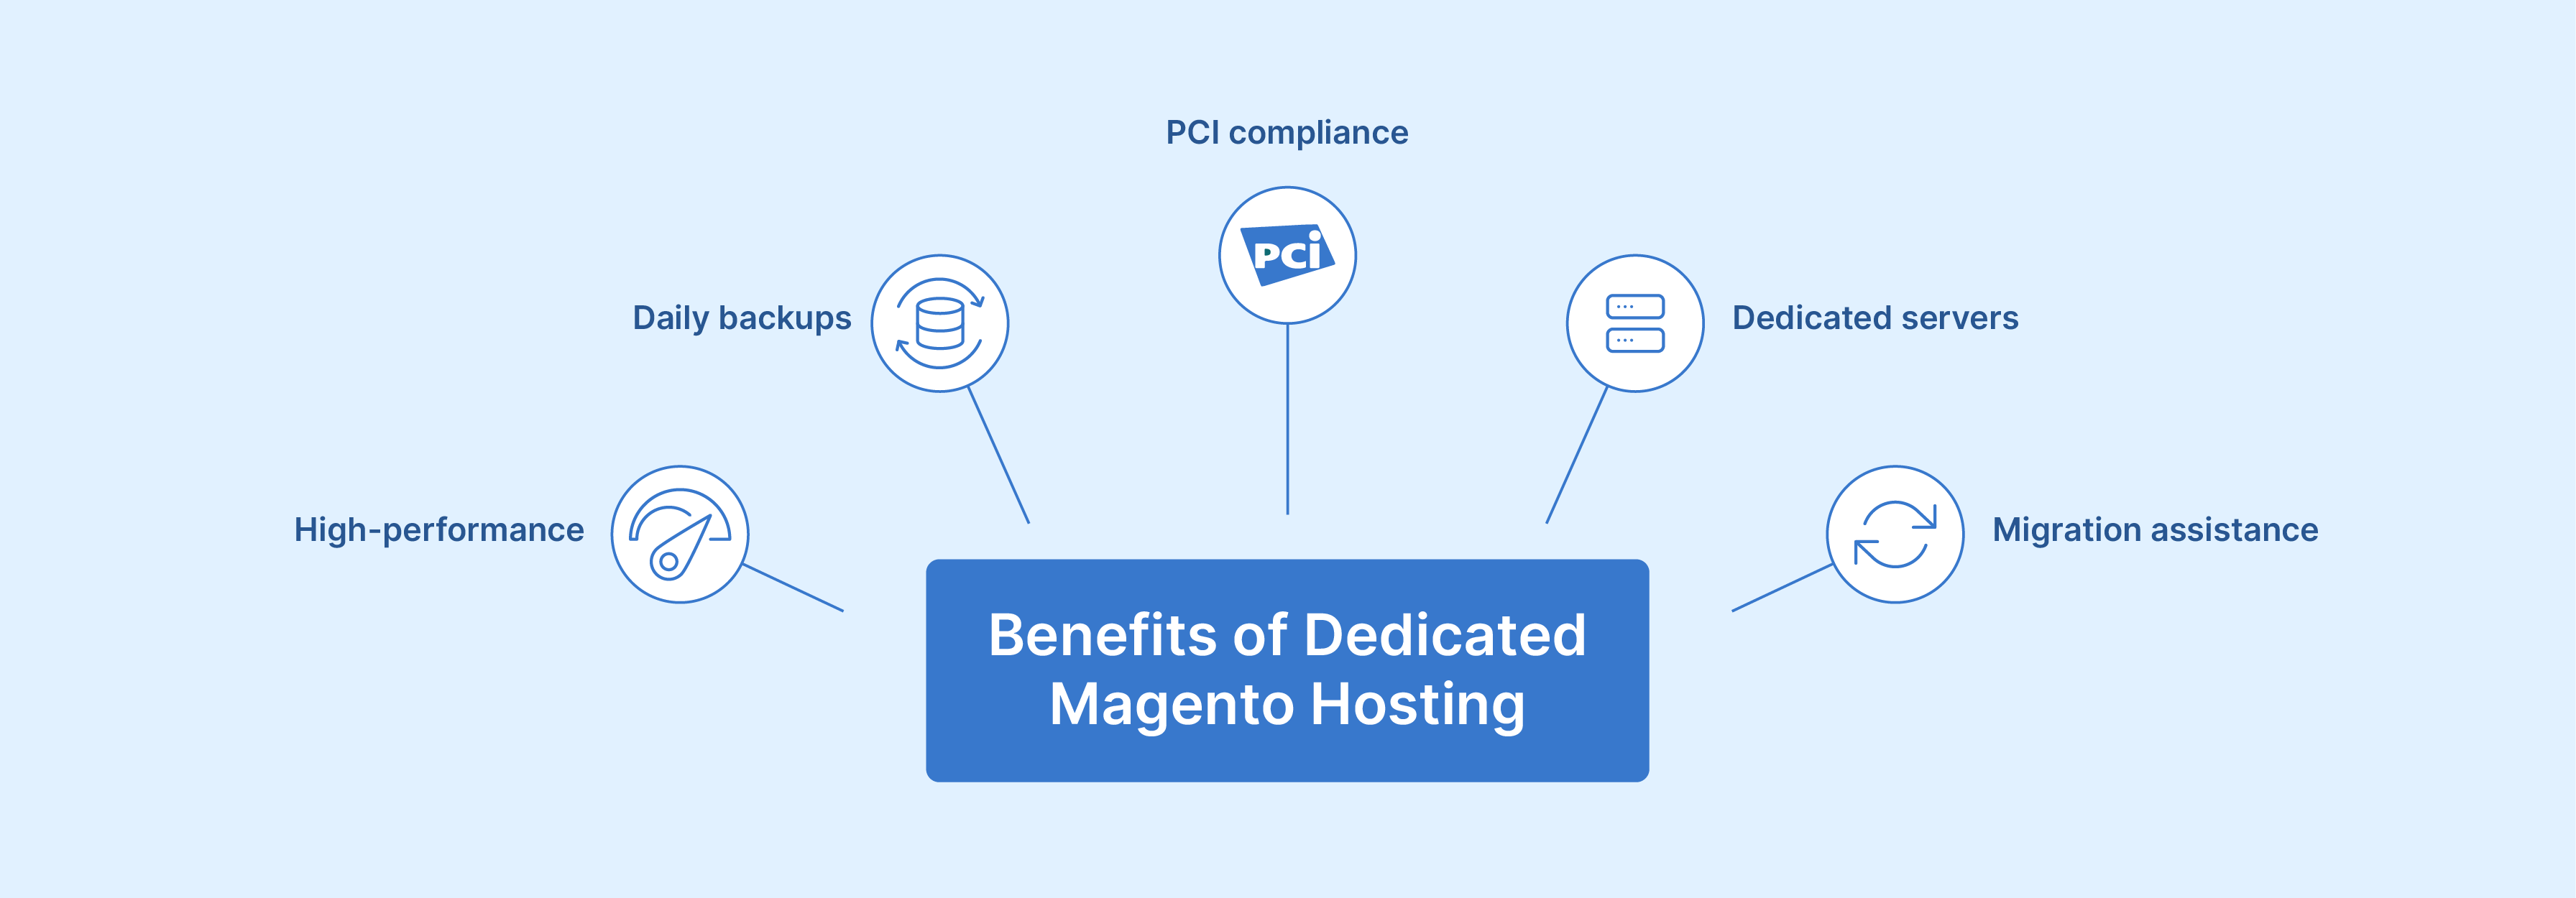 Benefits of dedicated hosting for Magento